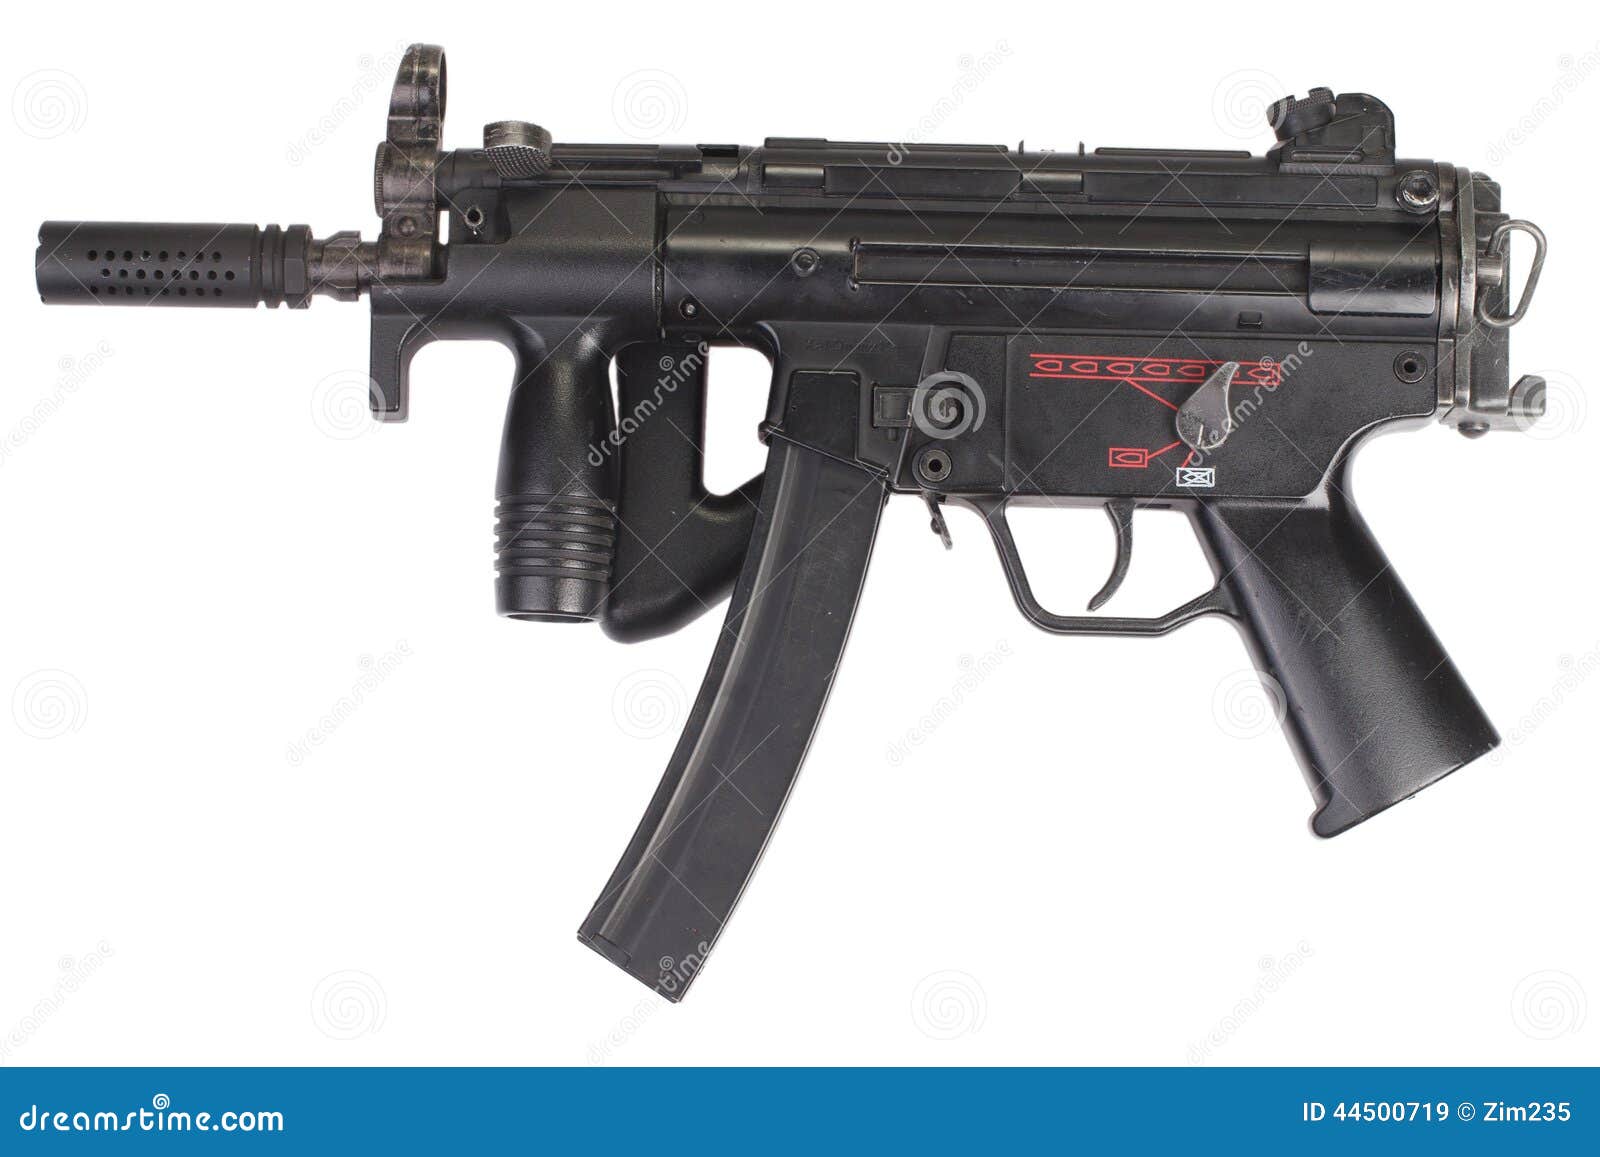 Submachine gun MP5 isolated on white background